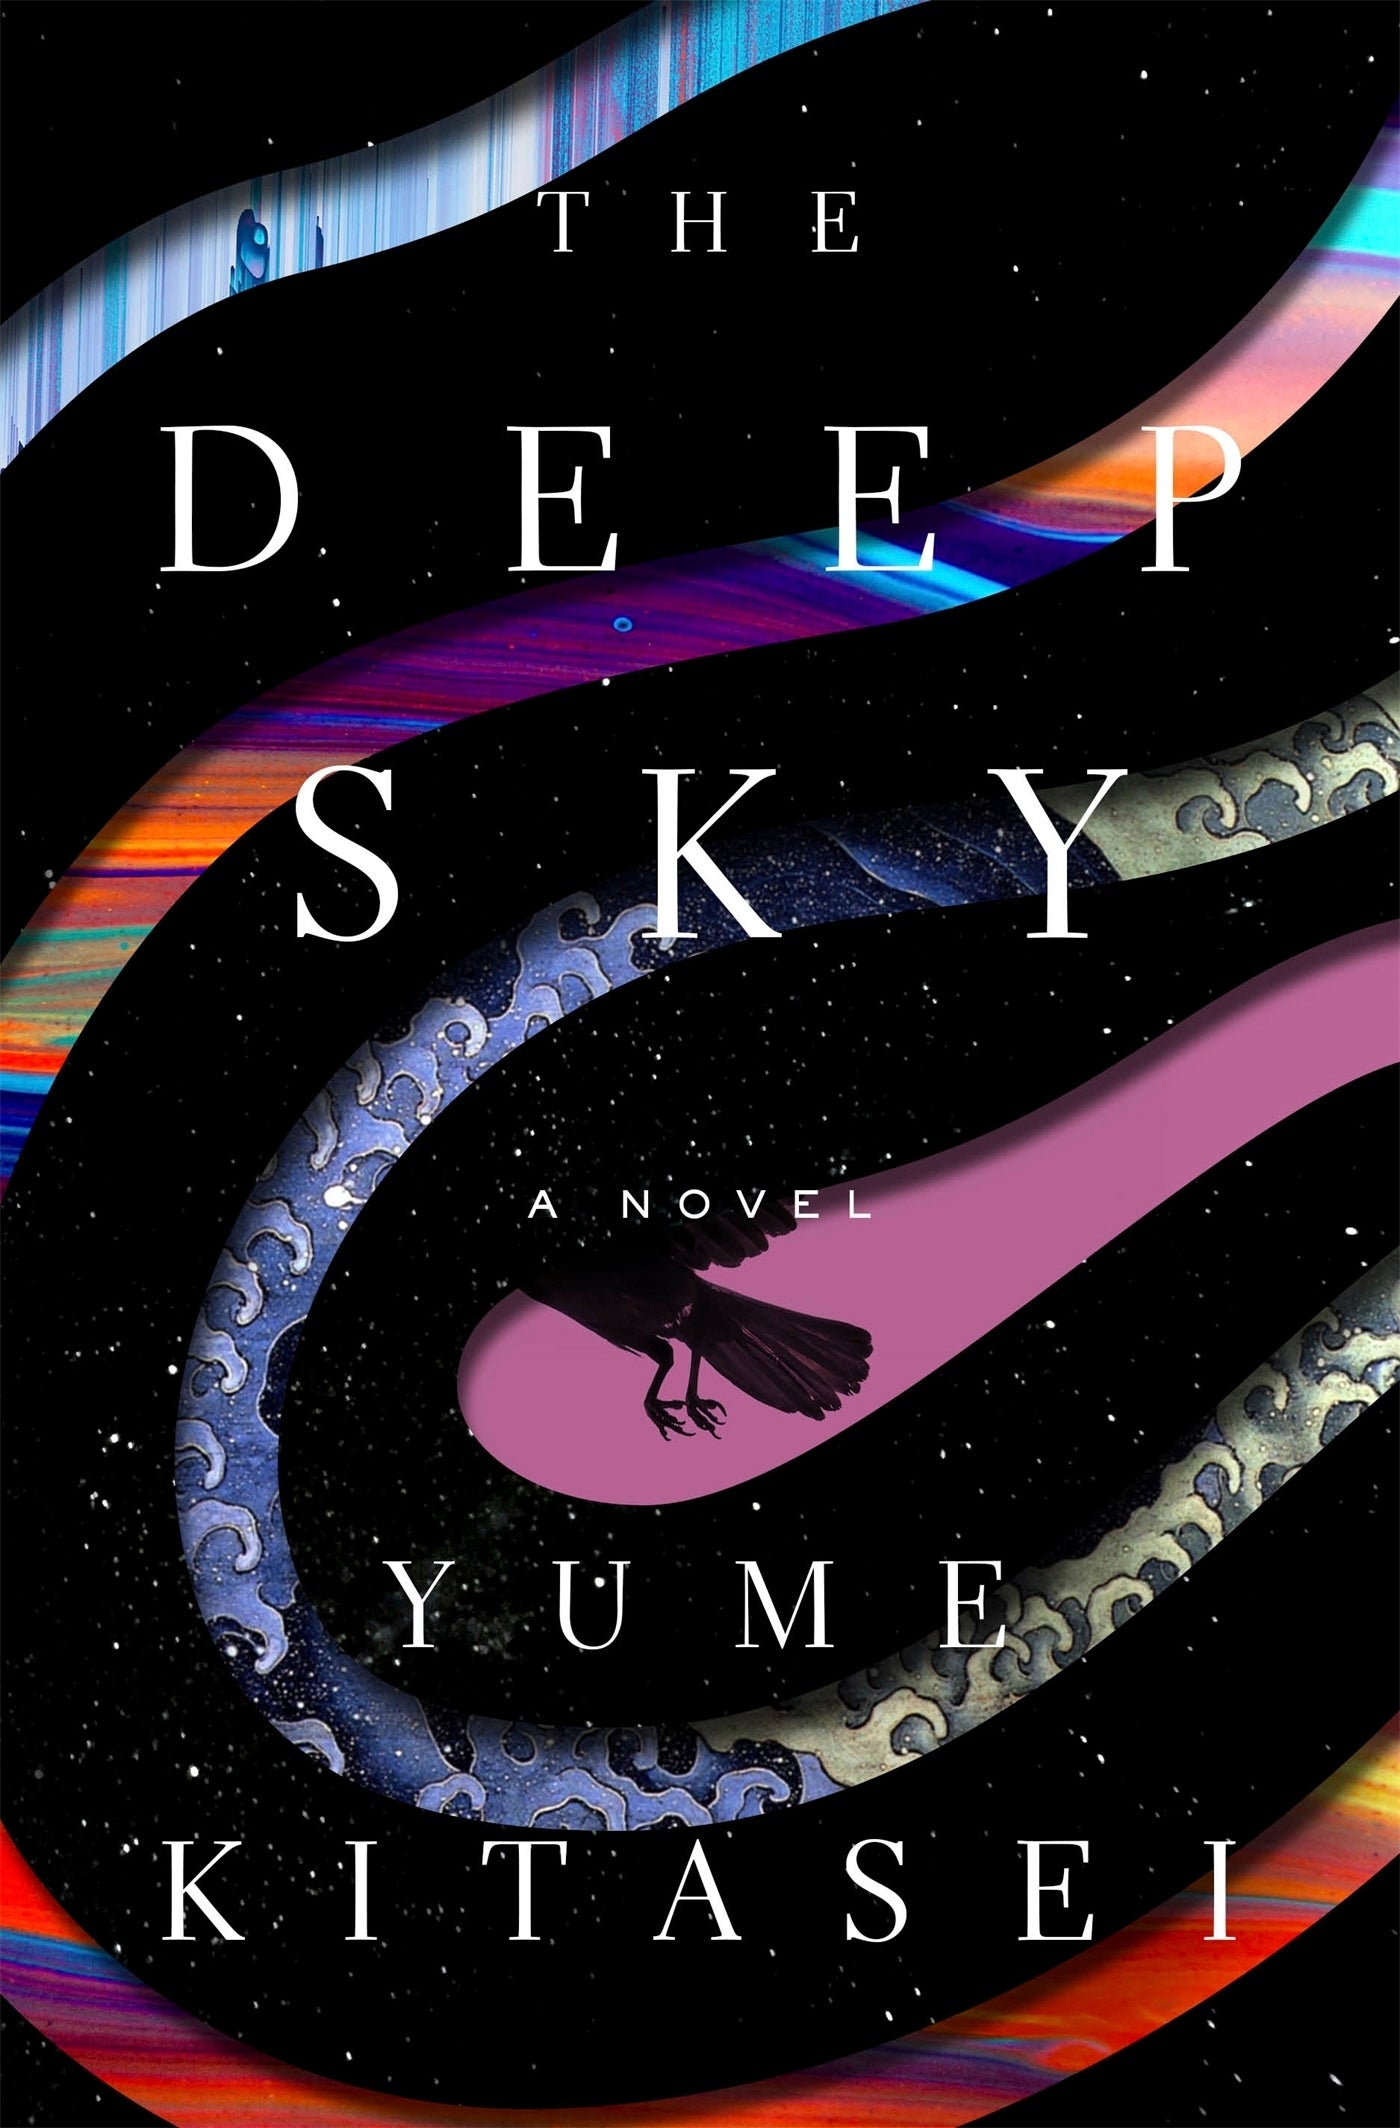 Book Review - The Deep Sky